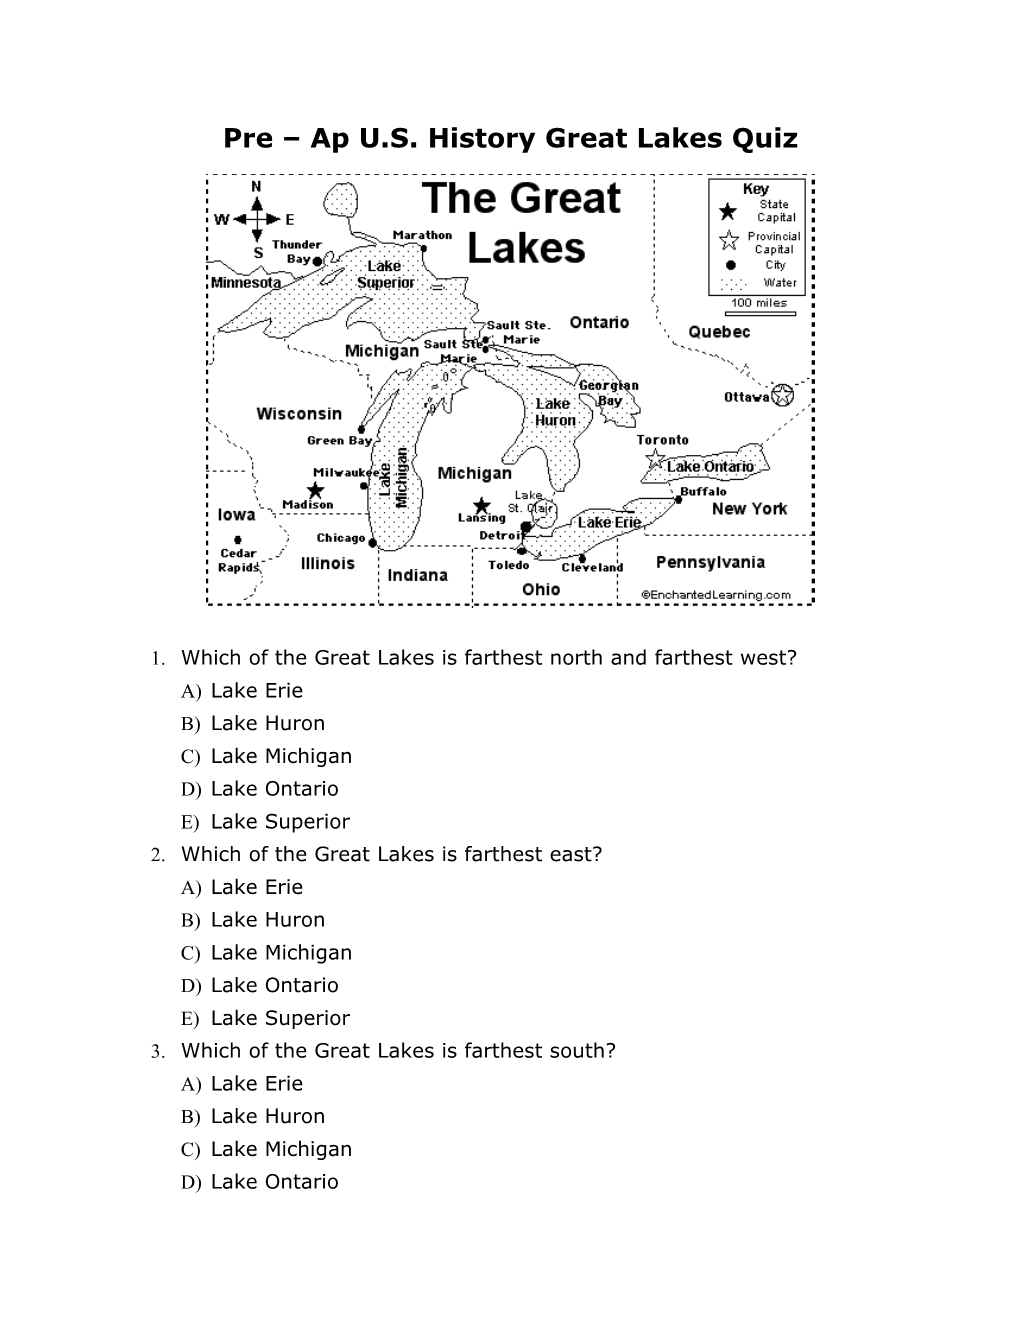 Pre Ap U.S. History Great Lakes Quiz